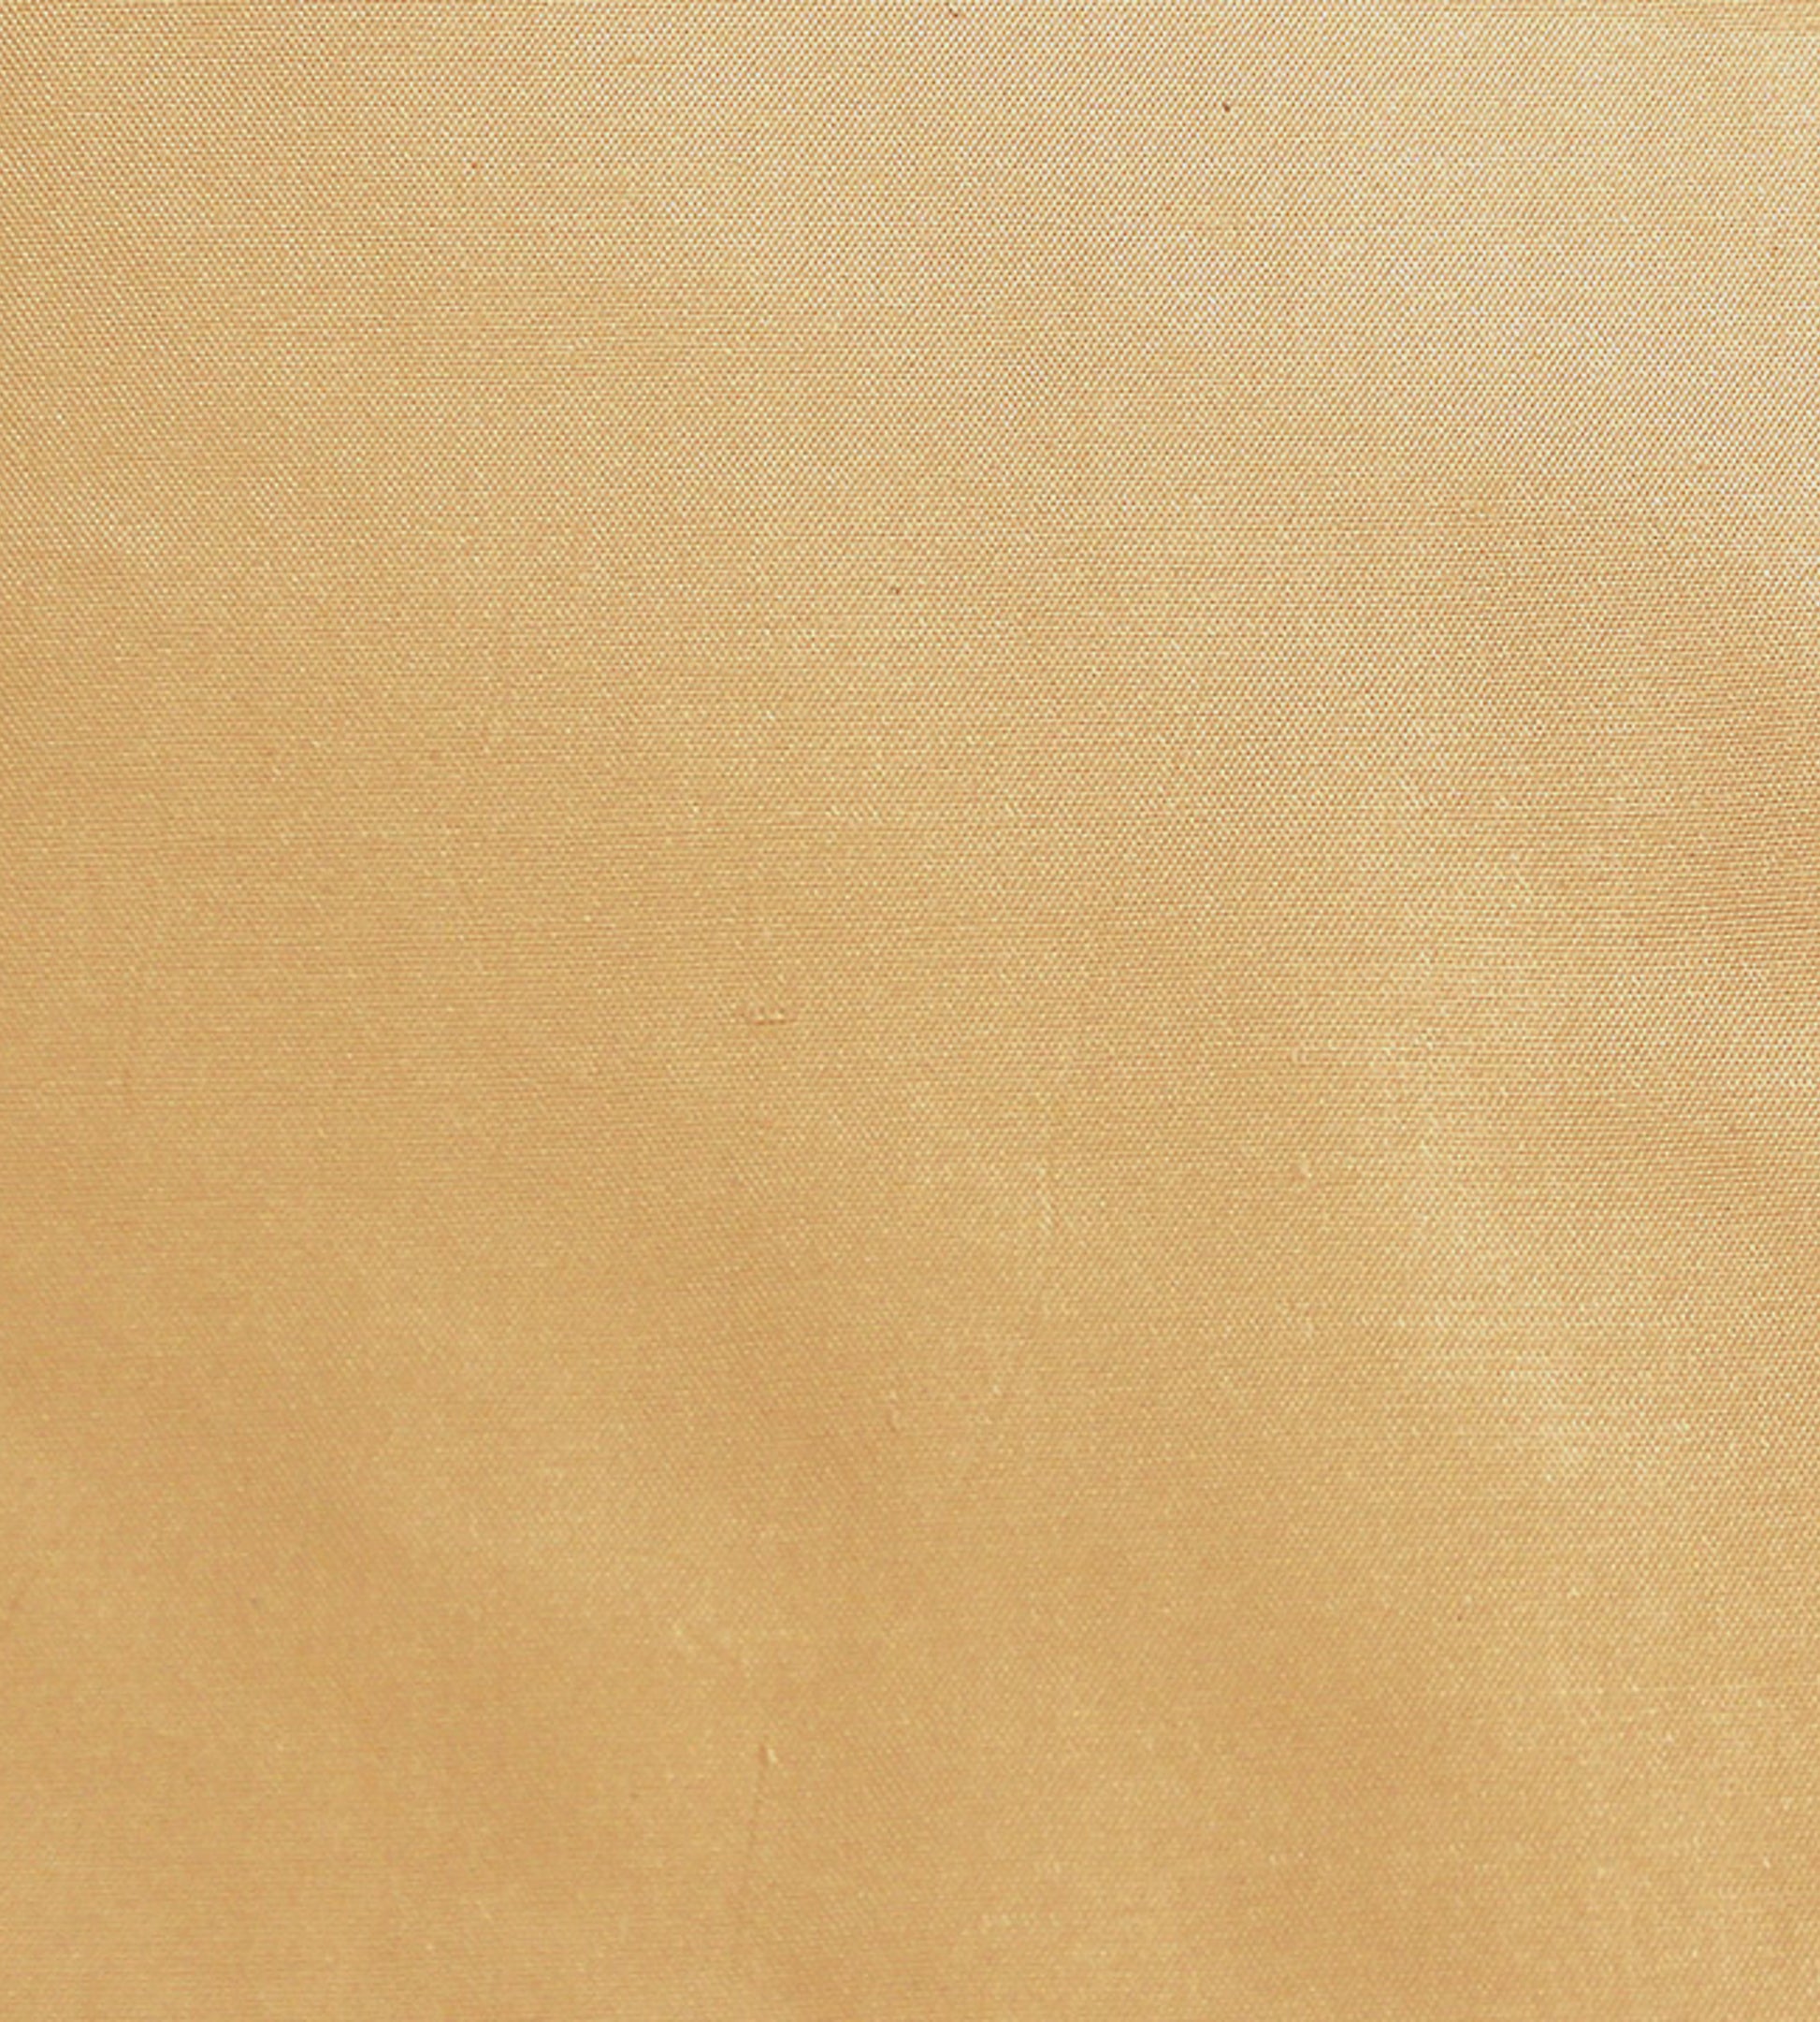 Purchase Scalamandre Fabric Pattern number SC 000636383, Dynasty Taffeta Honey 1